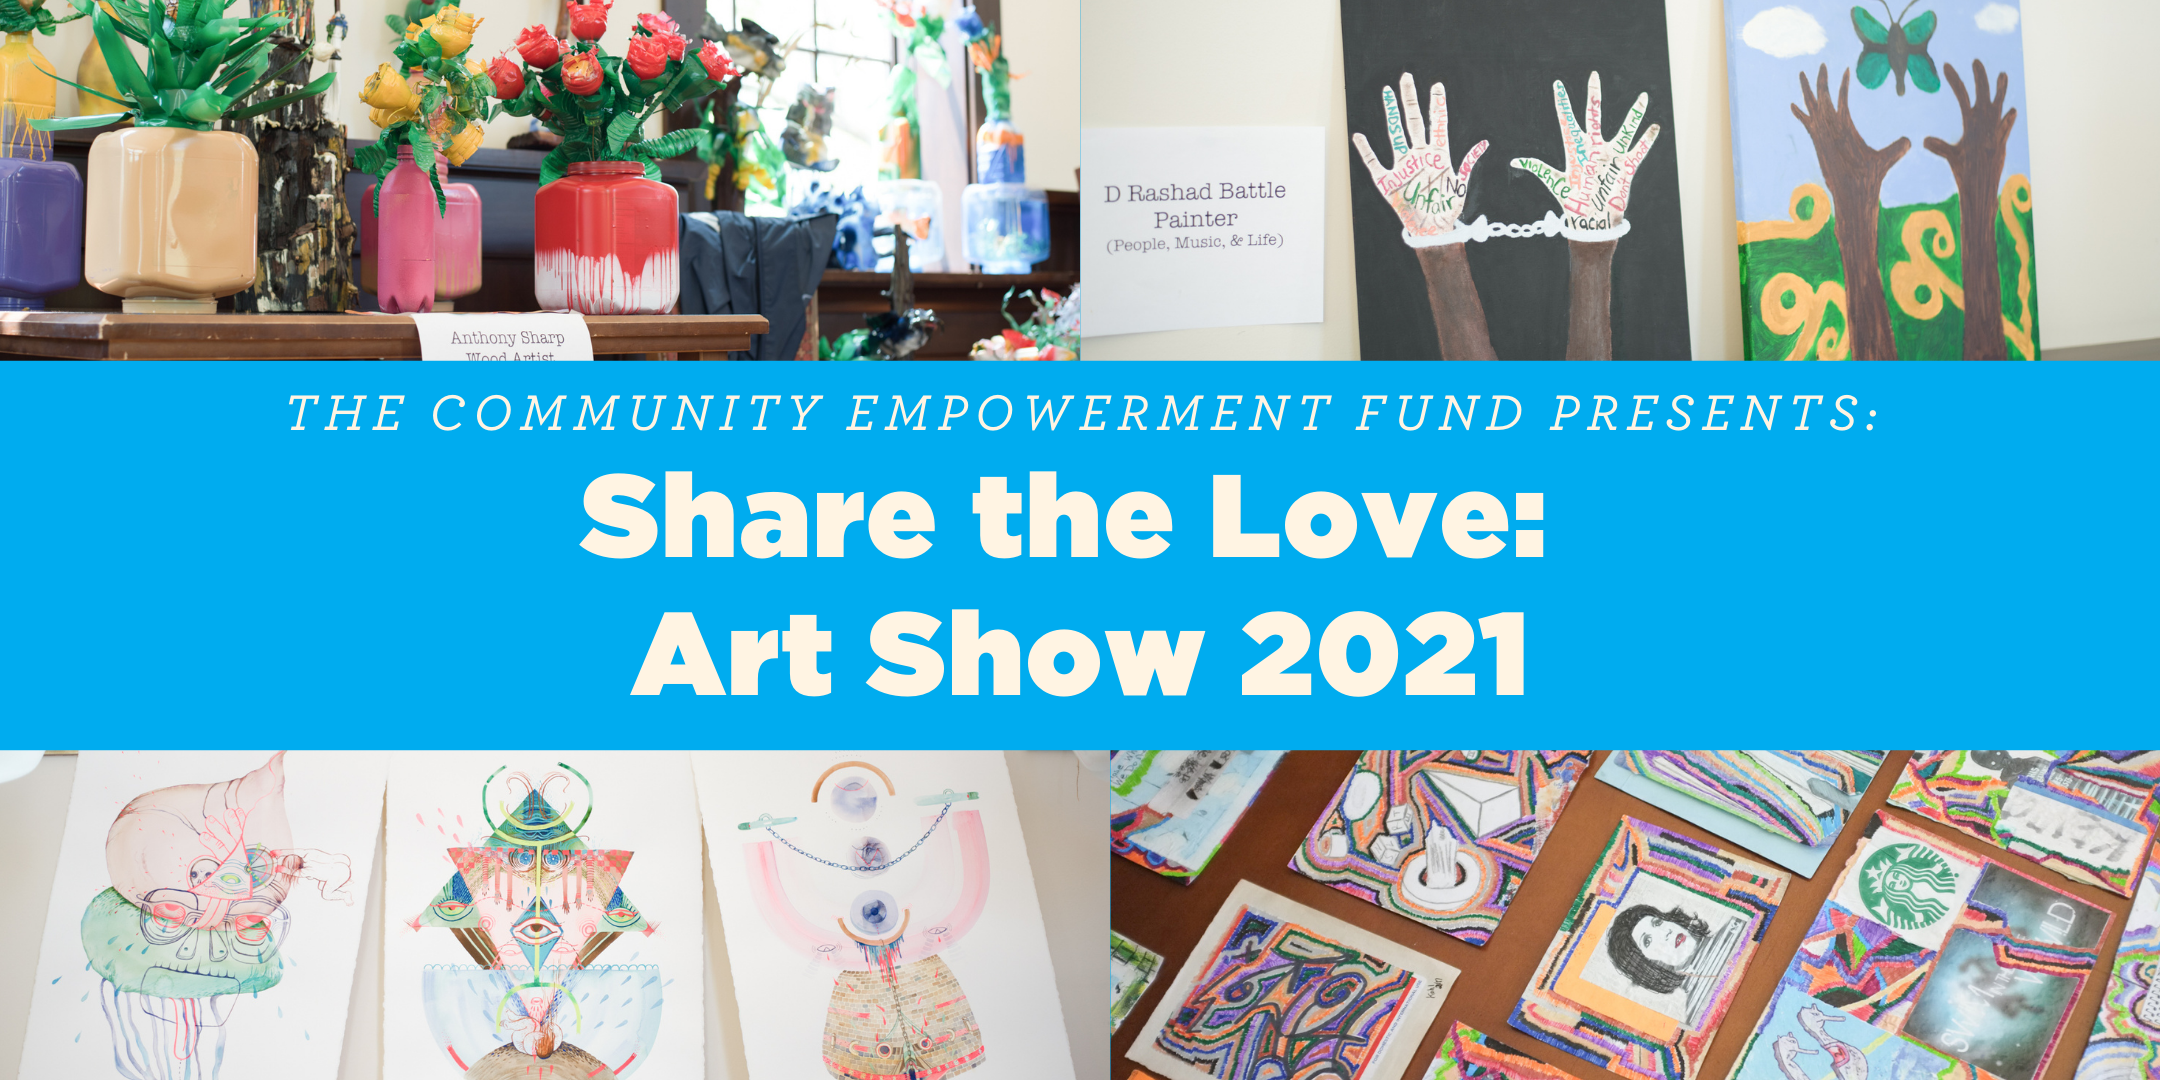 Share the Love: Art Show 2021